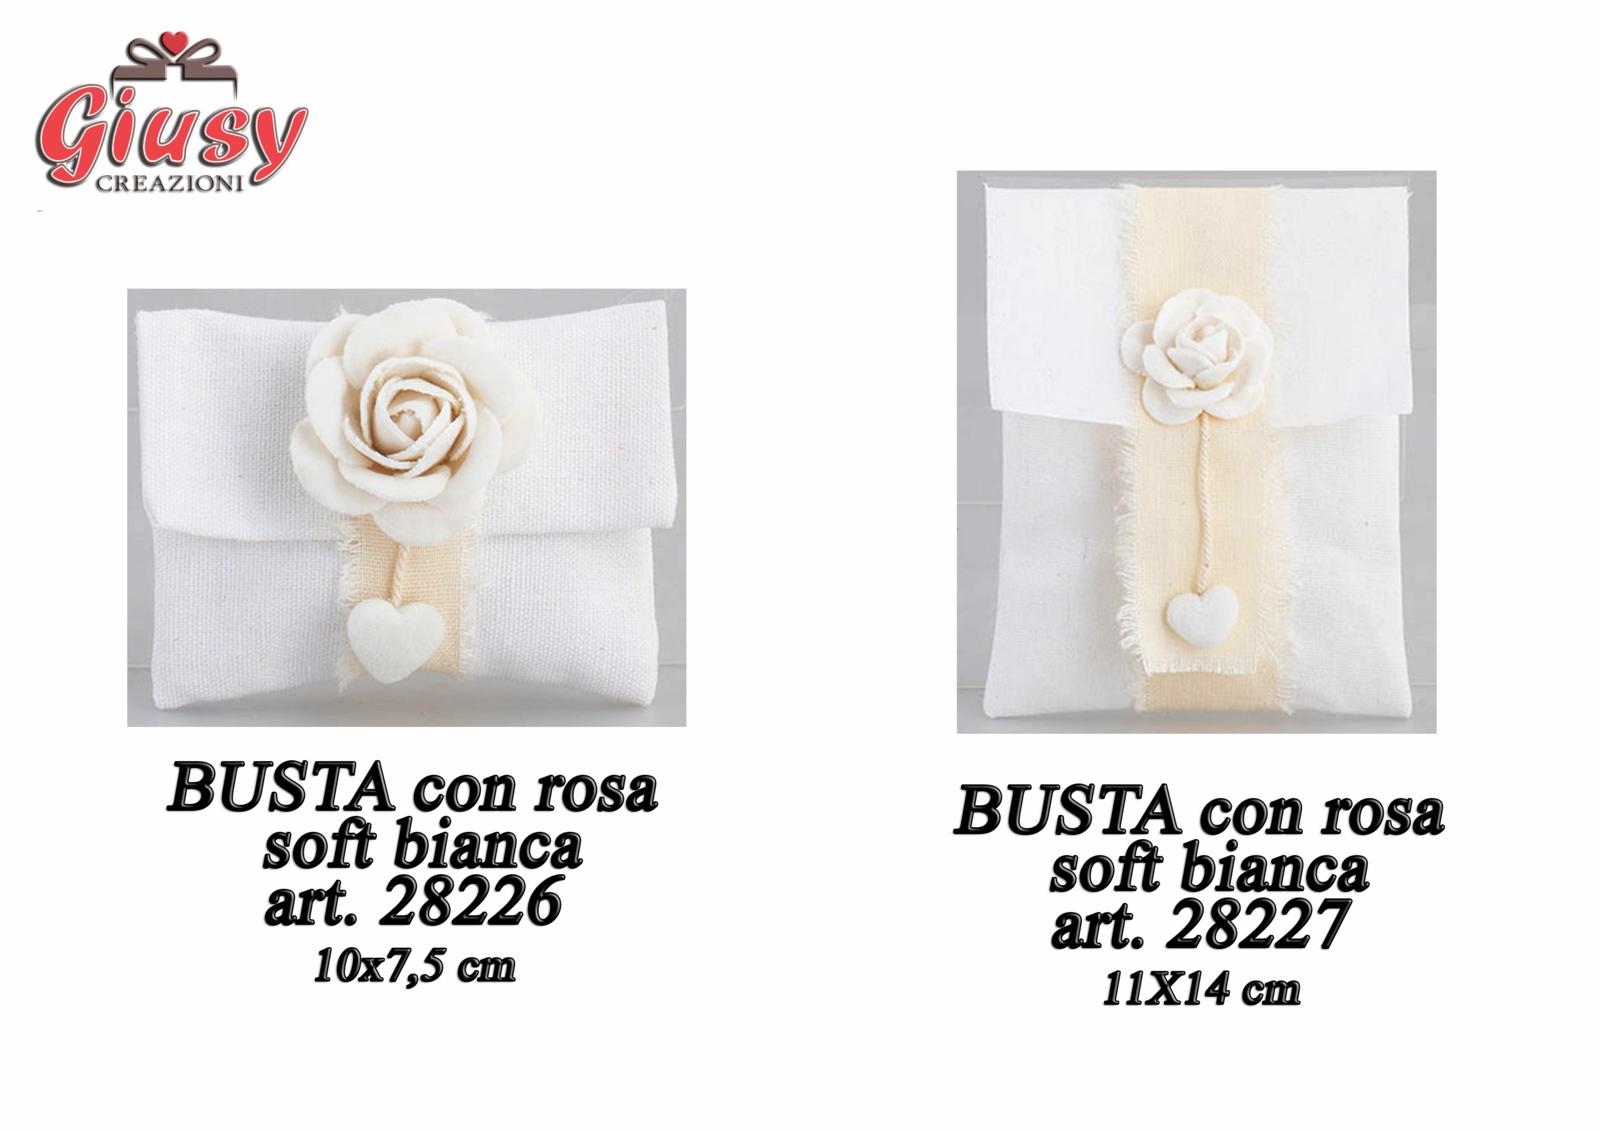 Busta Con Rosa Soft Bianca 11x14 Cm 12*360